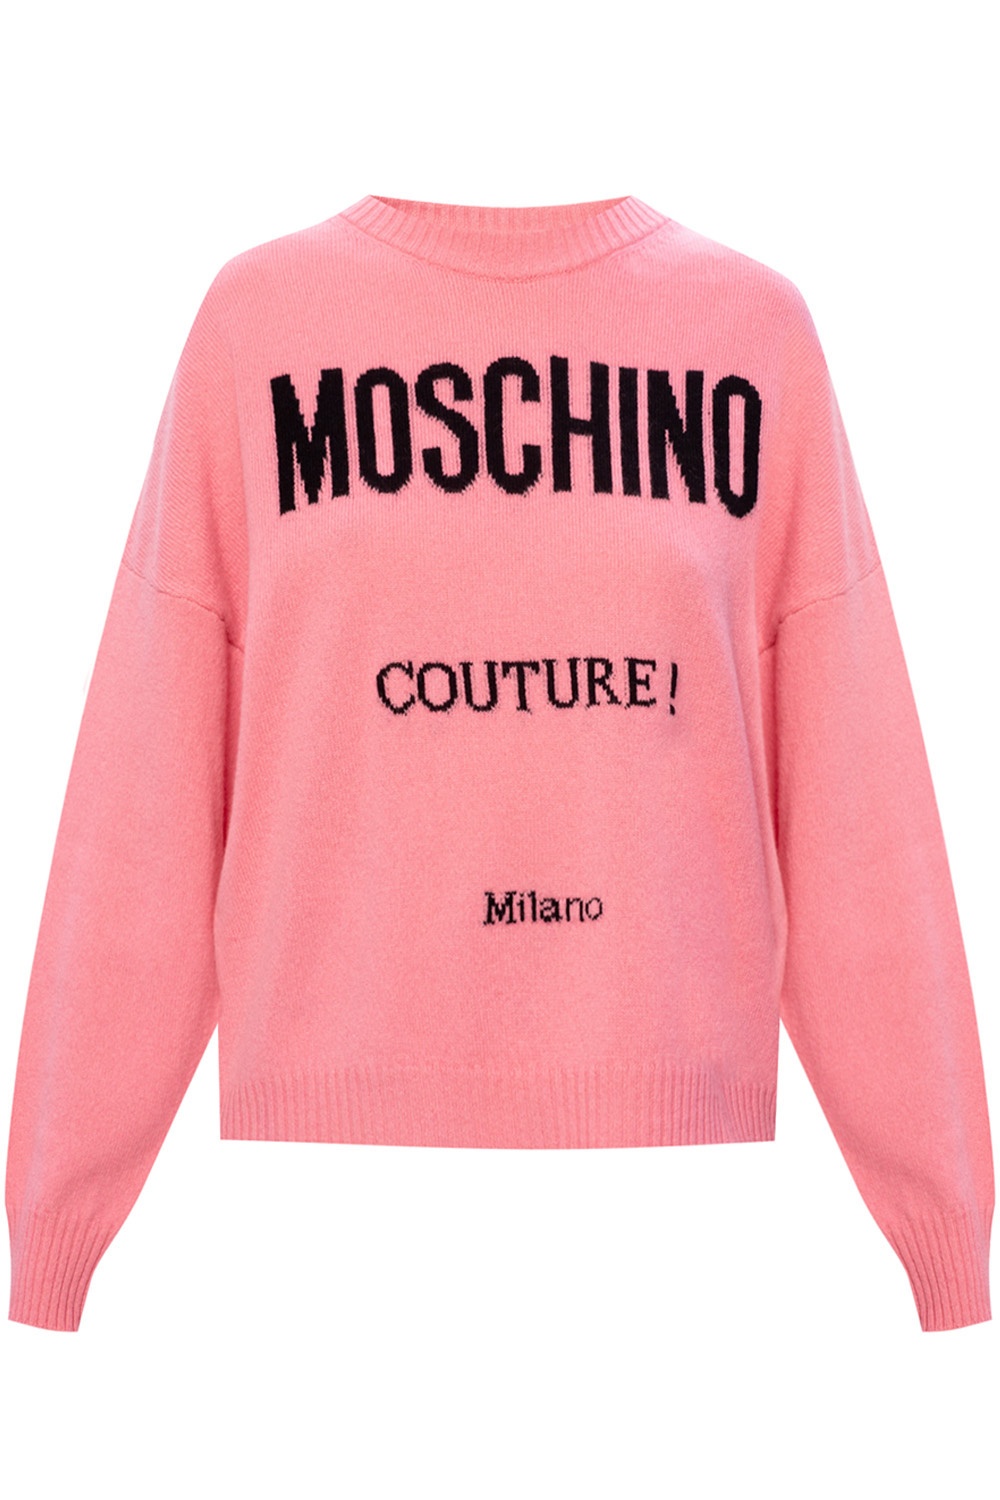 Moschino Wool sweater with logo | Women's Clothing | IetpShops